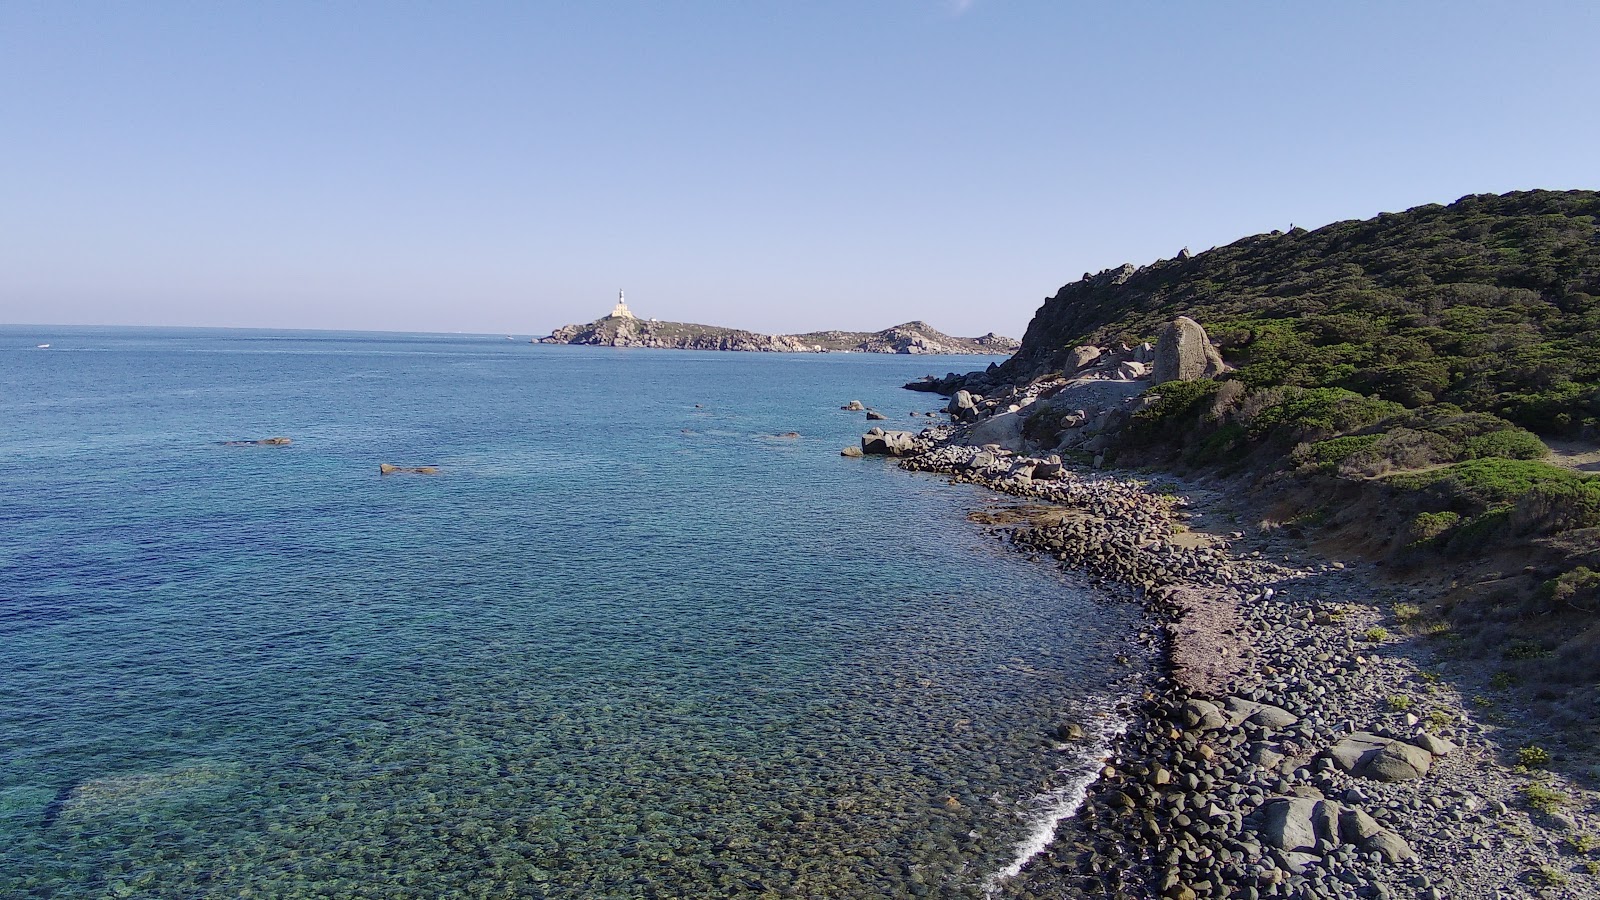 Fotografija Spiaggia Cala Burroni nahaja se v naravnem okolju